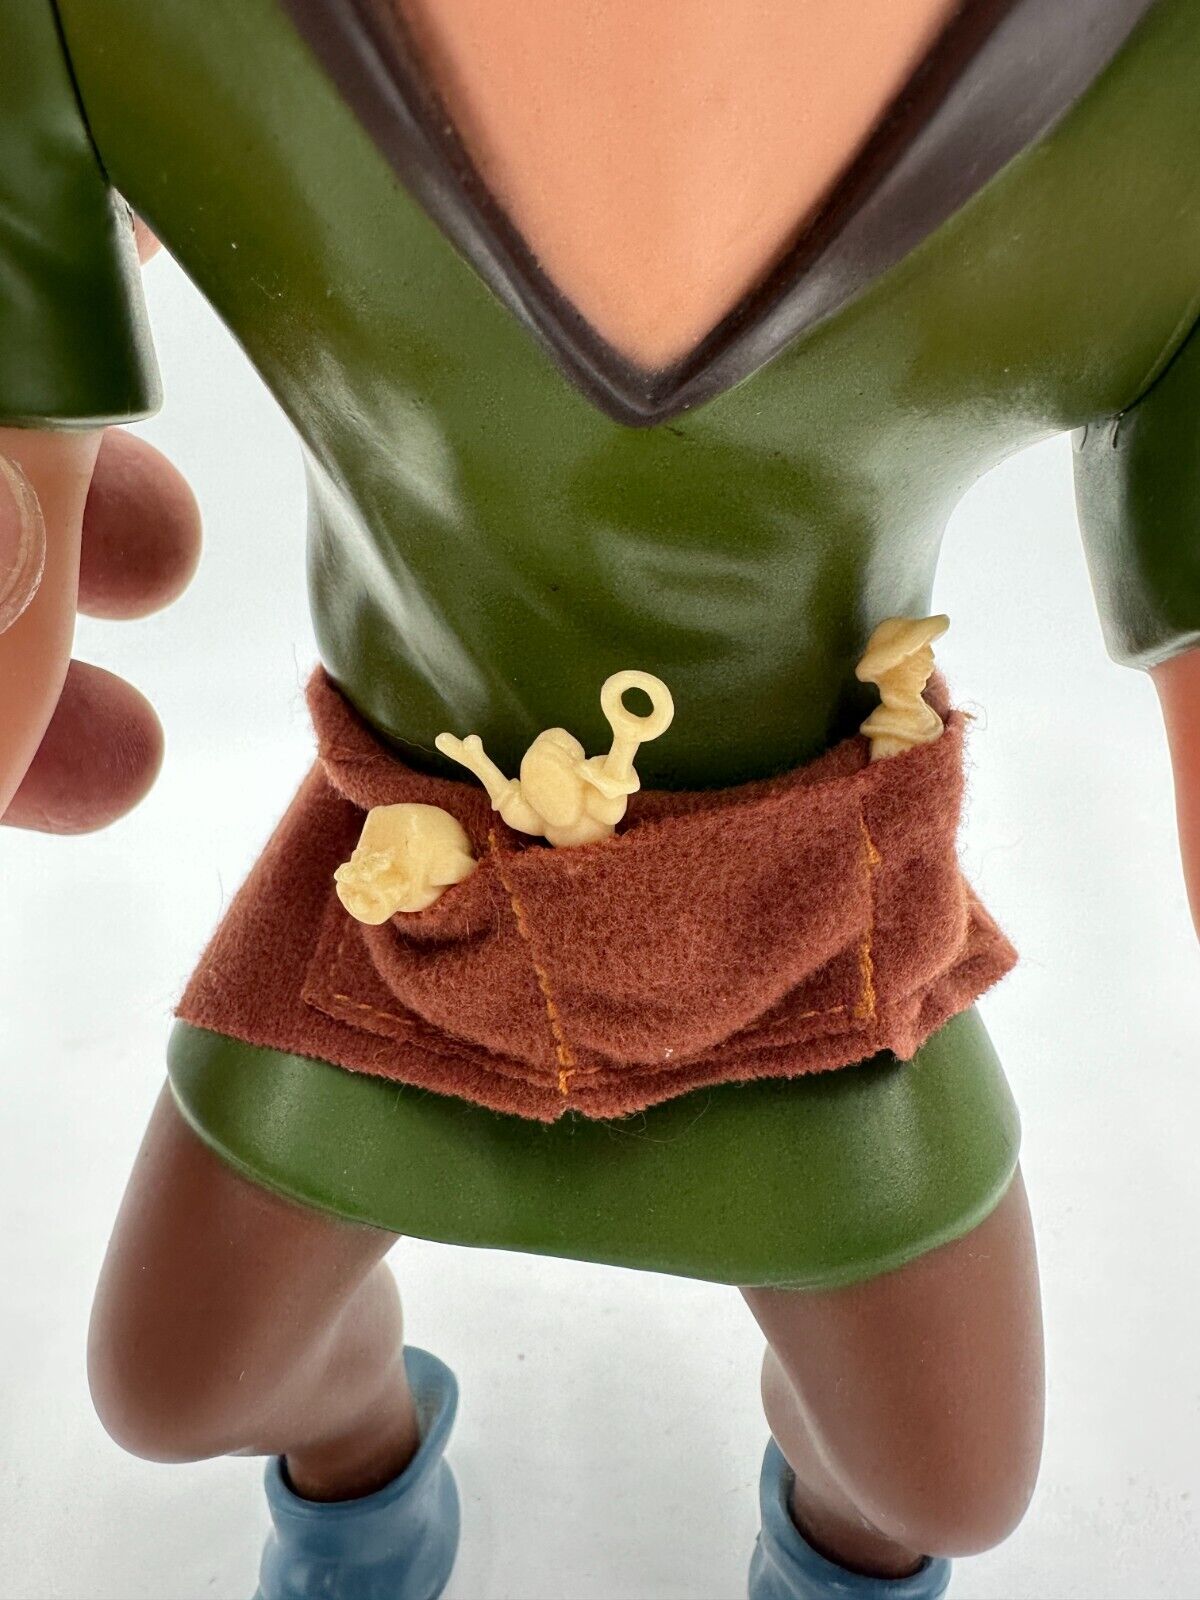 Mattel Disney Hunchback of Notre Dame Quasimodo Toy 9in With 3 Gargoyles